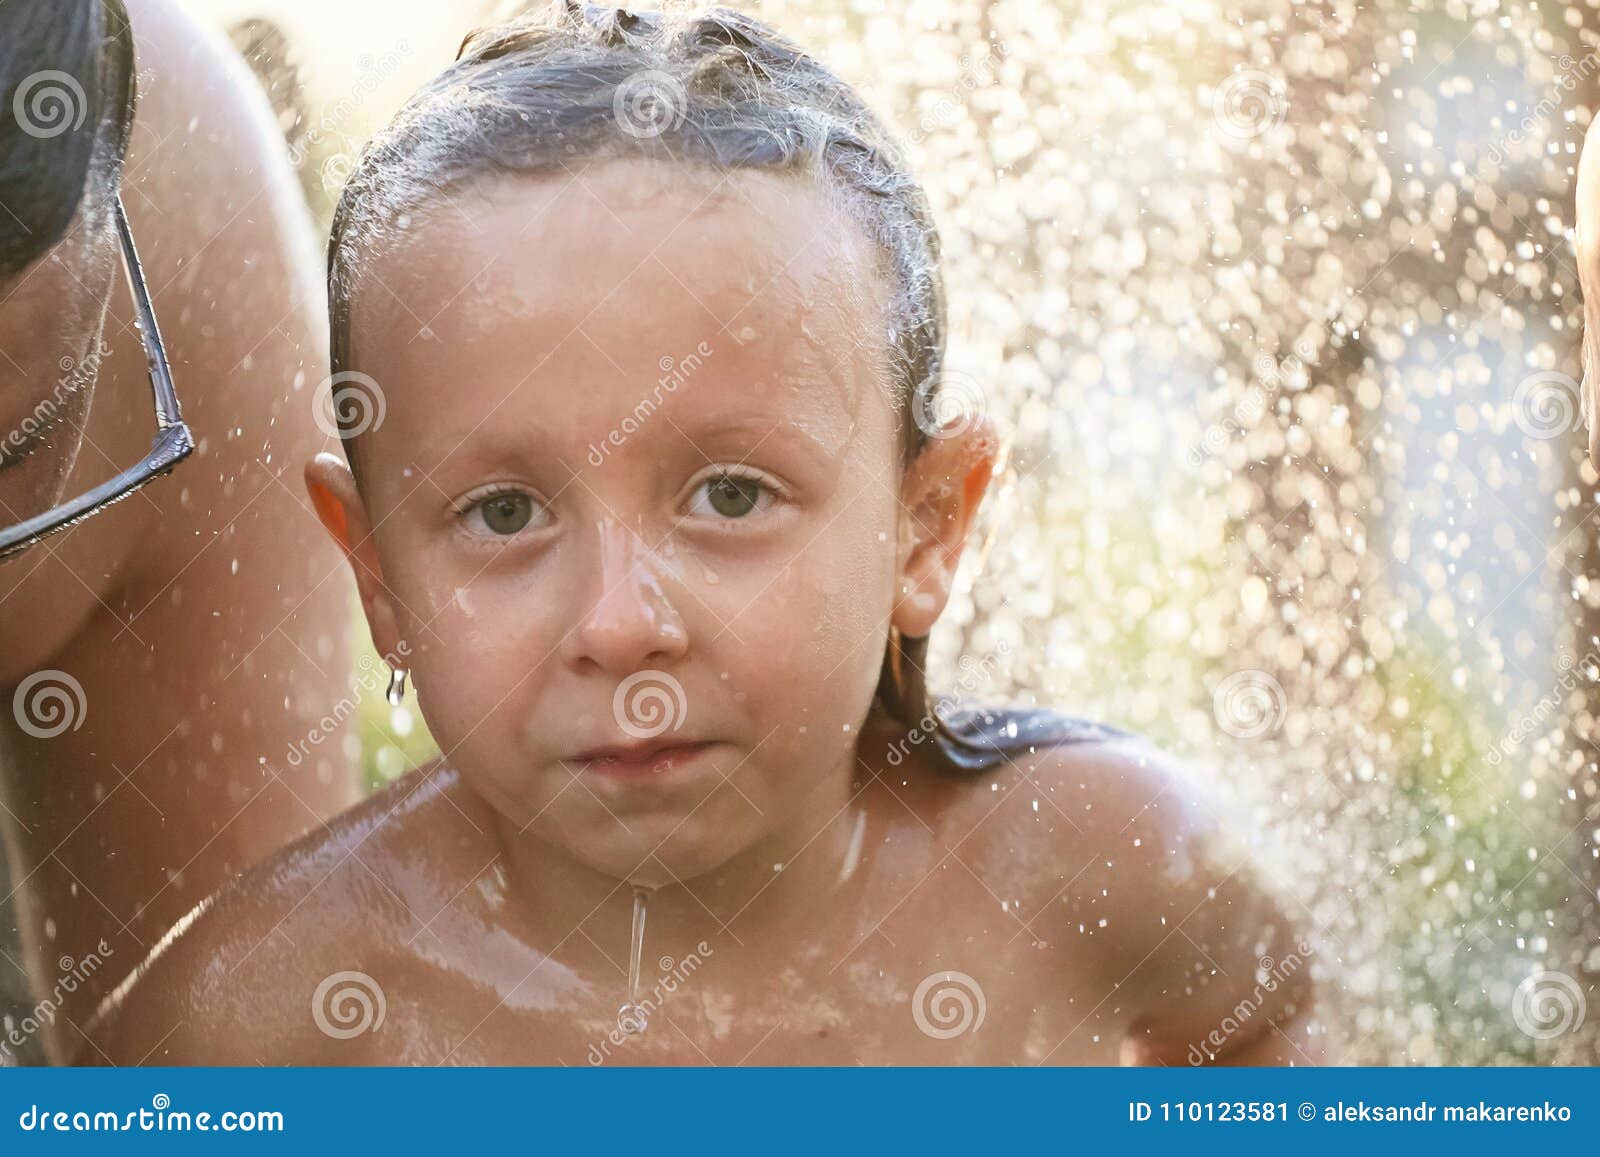 Water Fun Girl In The Shower Splashing Water Stock Image Image Of